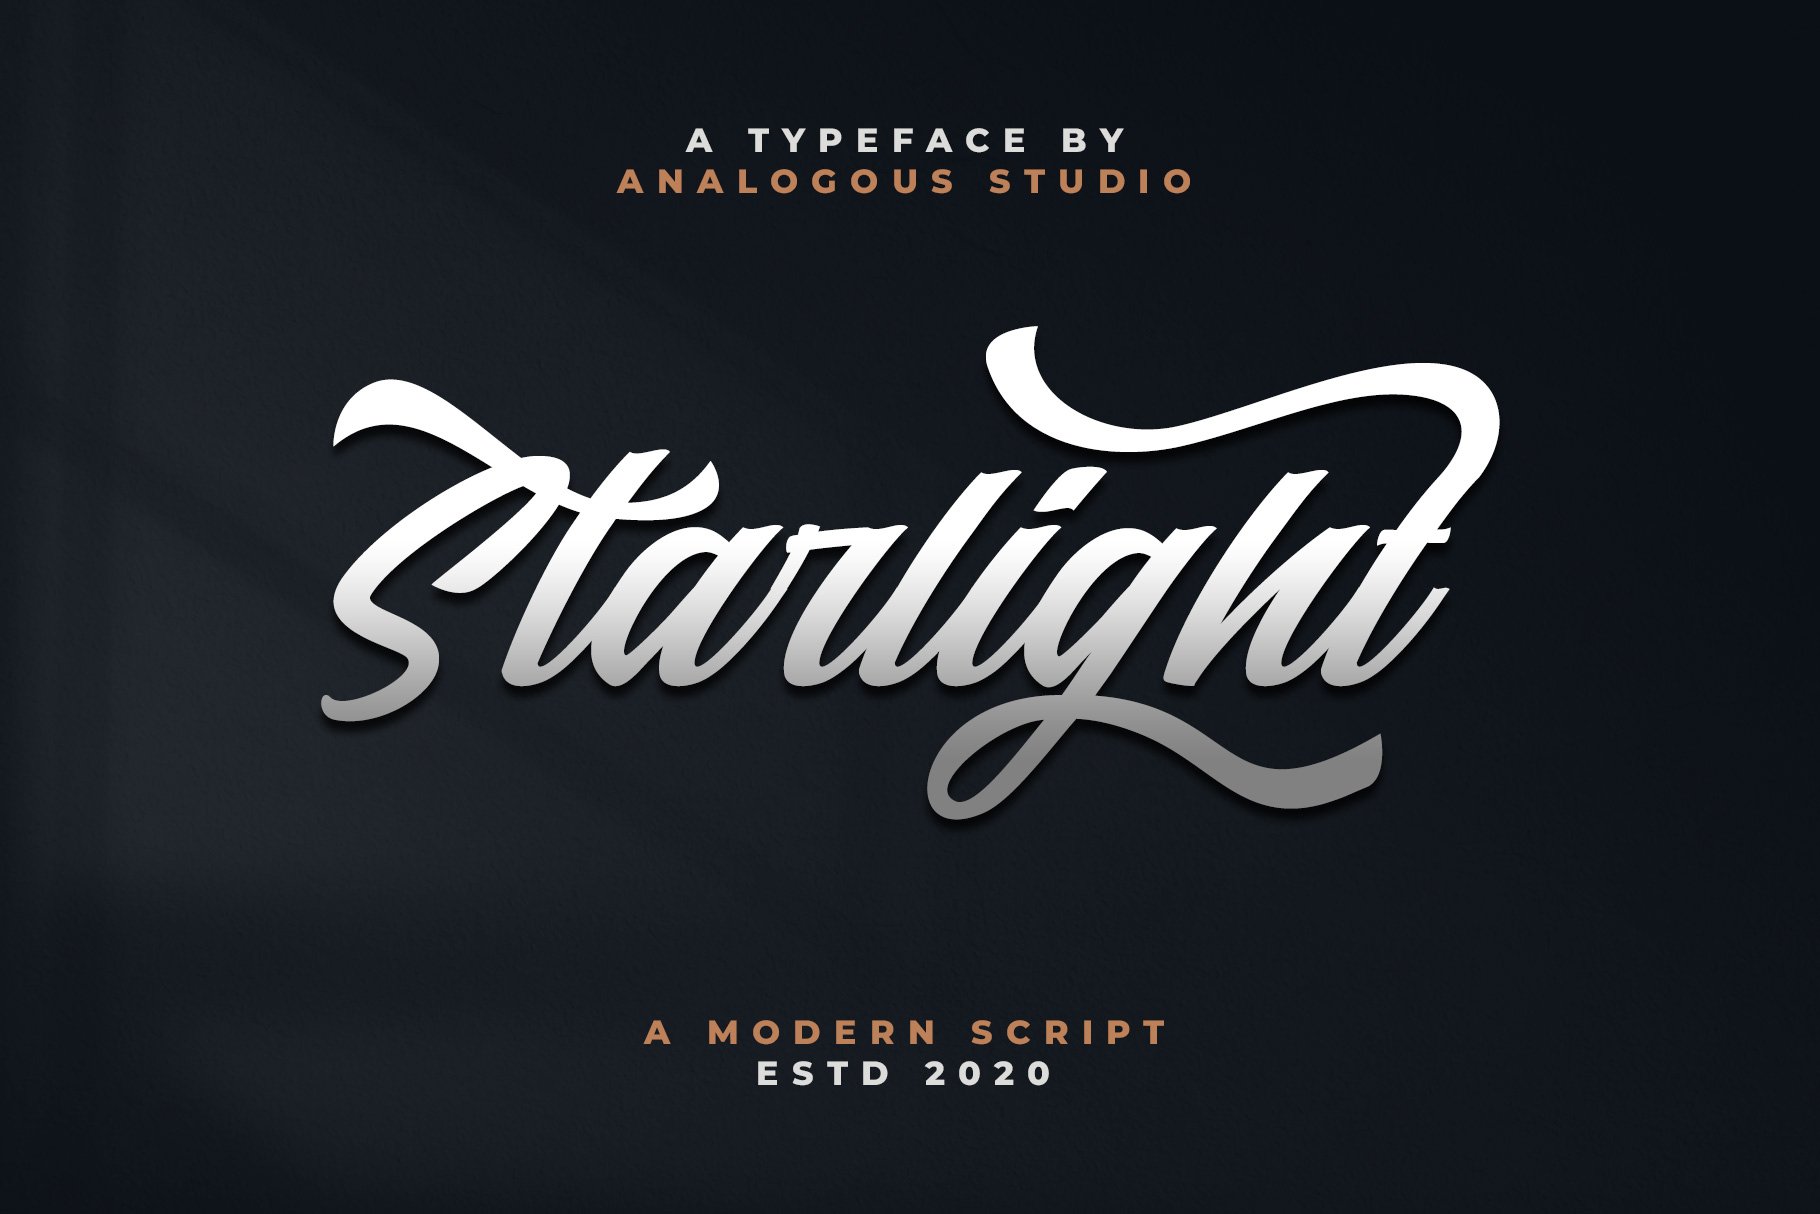 Starlight || Modern Script cover image.